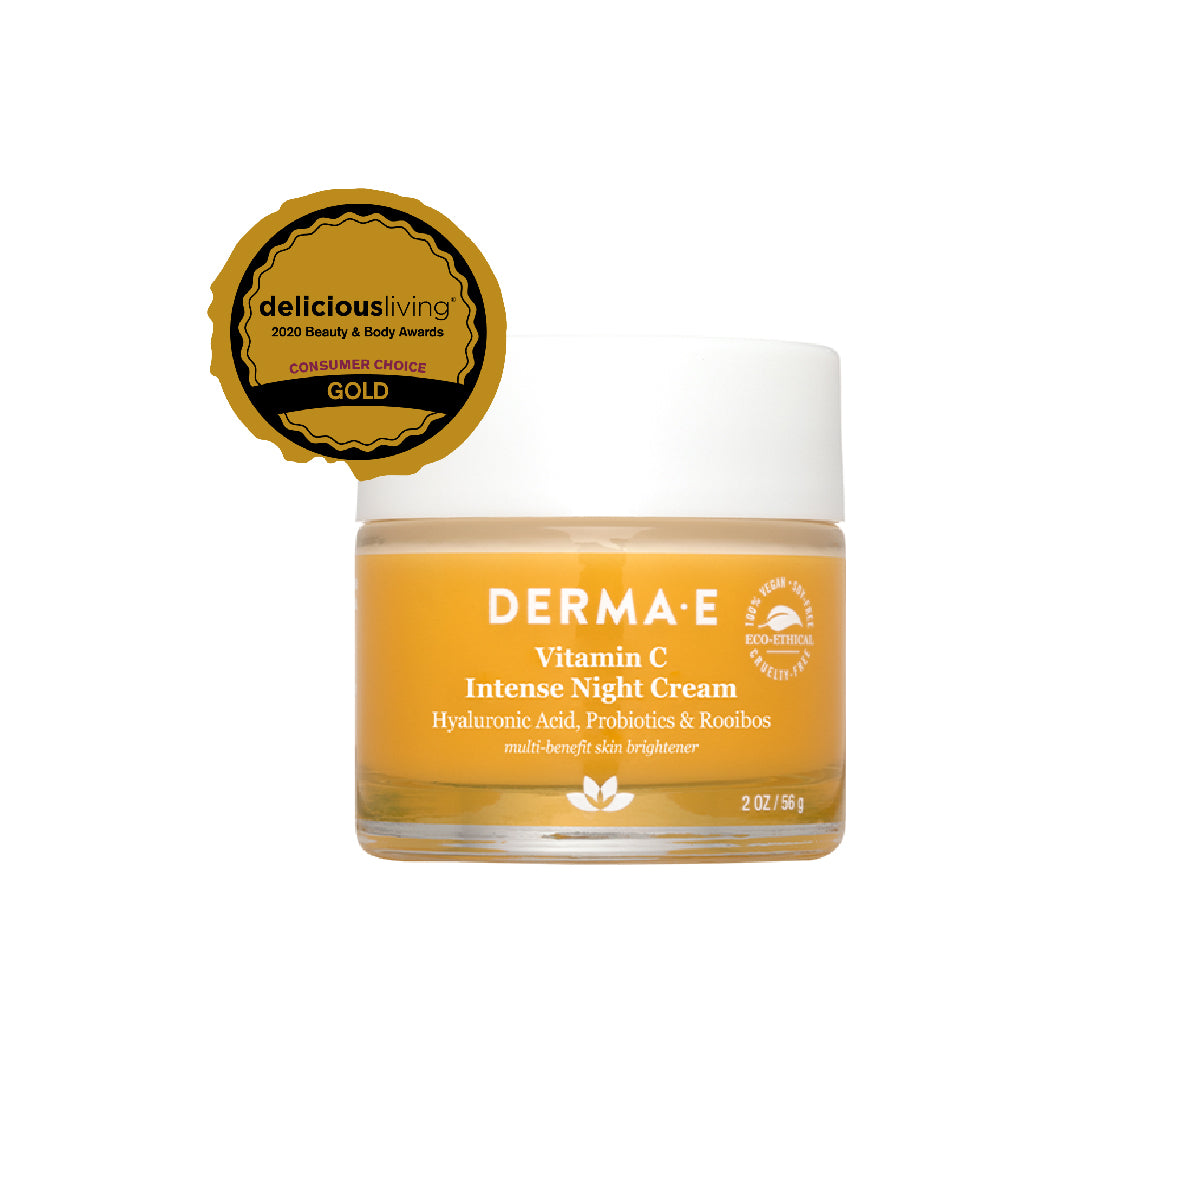 DERMA E Vitamin C Intense Night Cream - Unlock Radiant Skin Overnight!